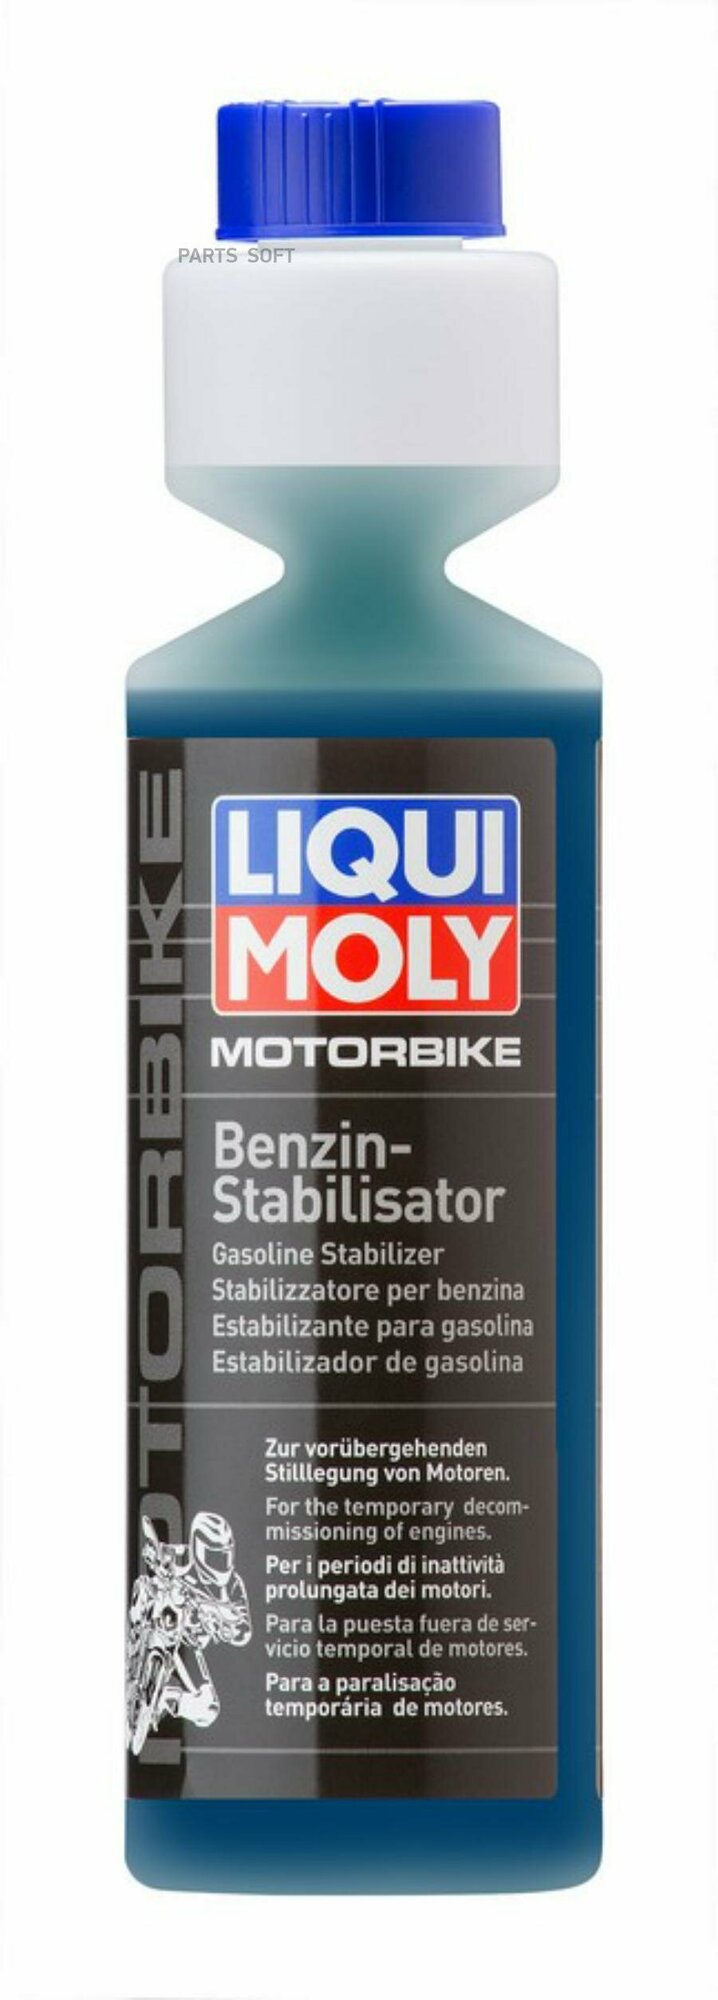 Стабилизатор бензина Motorbike Benzin Stabilisator (0,25л) LIQUI MOLY / арт. 3041 - (1 шт)